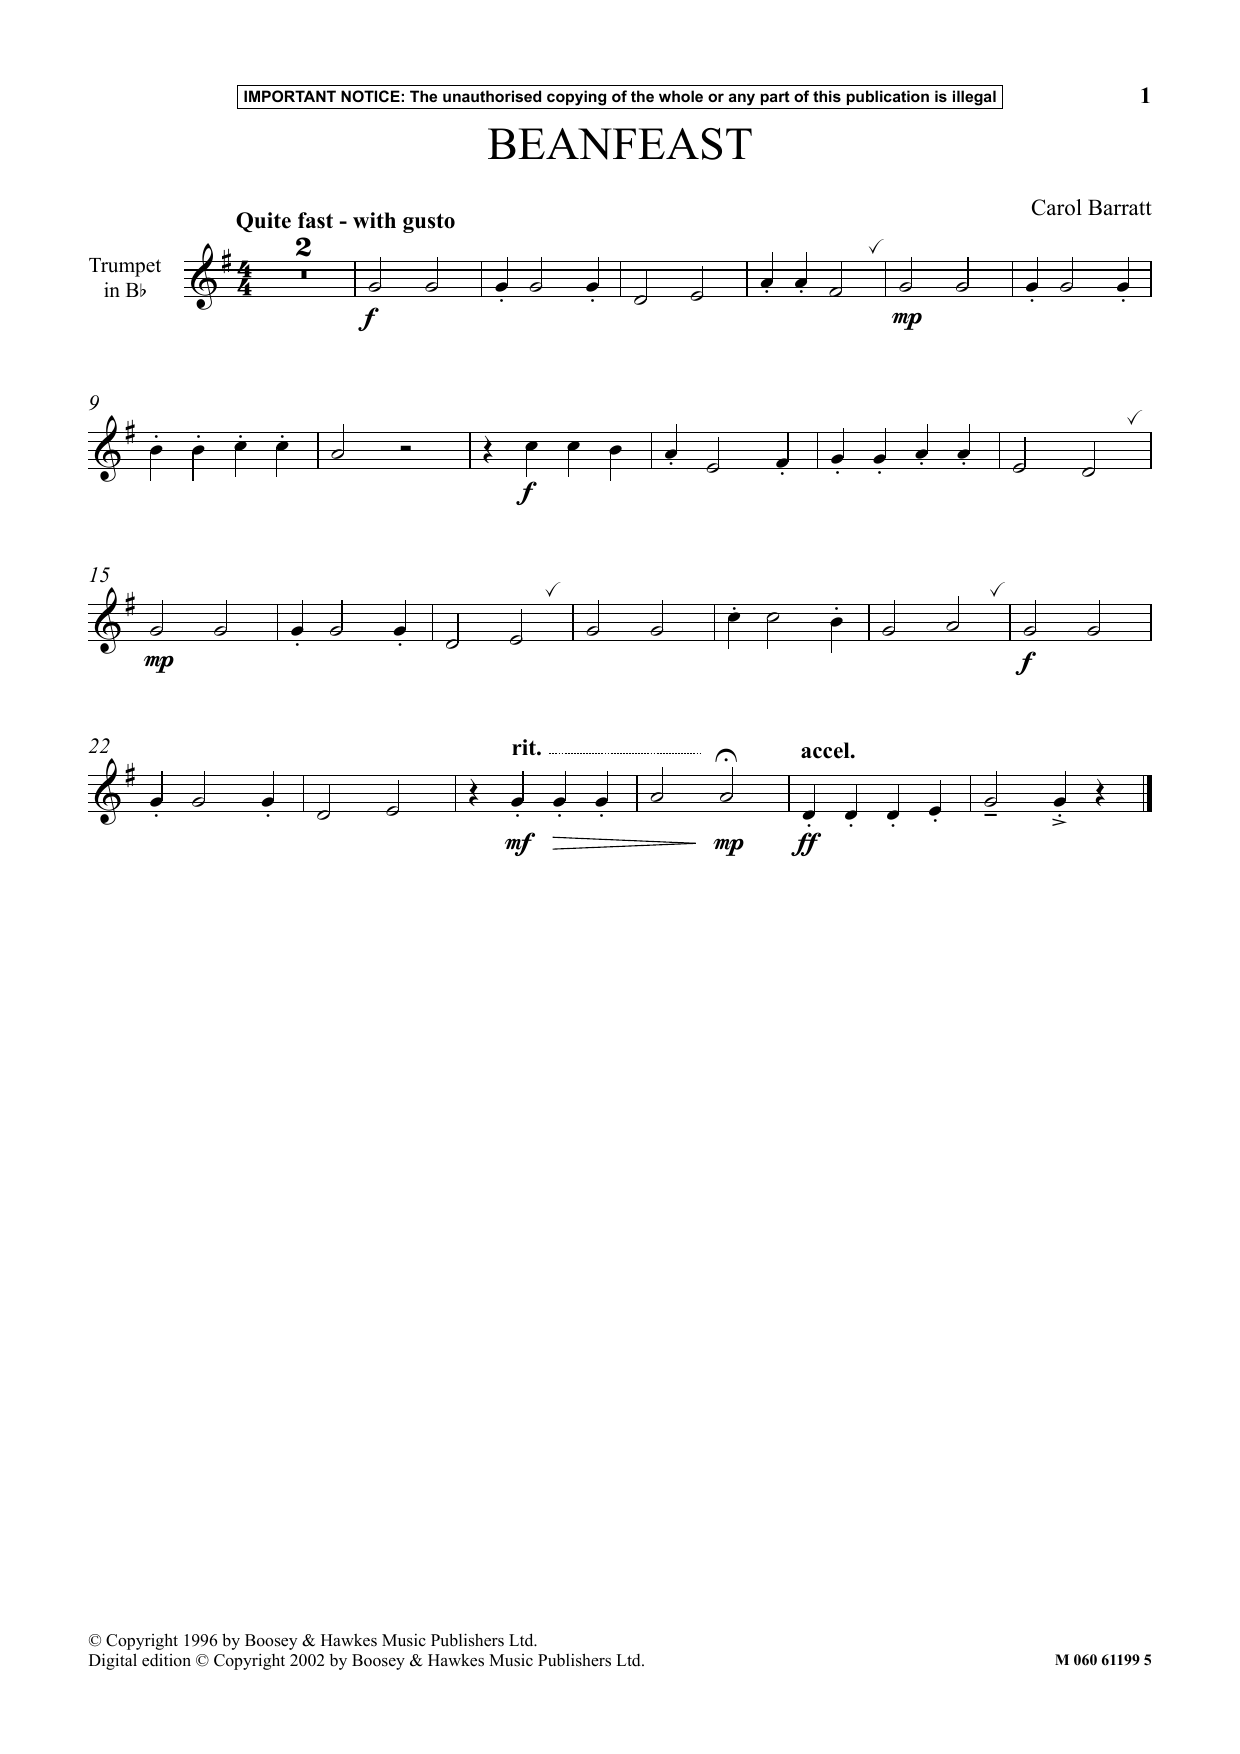 Carol Barratt Beanfeast Sheet Music Notes & Chords for Instrumental Solo - Download or Print PDF